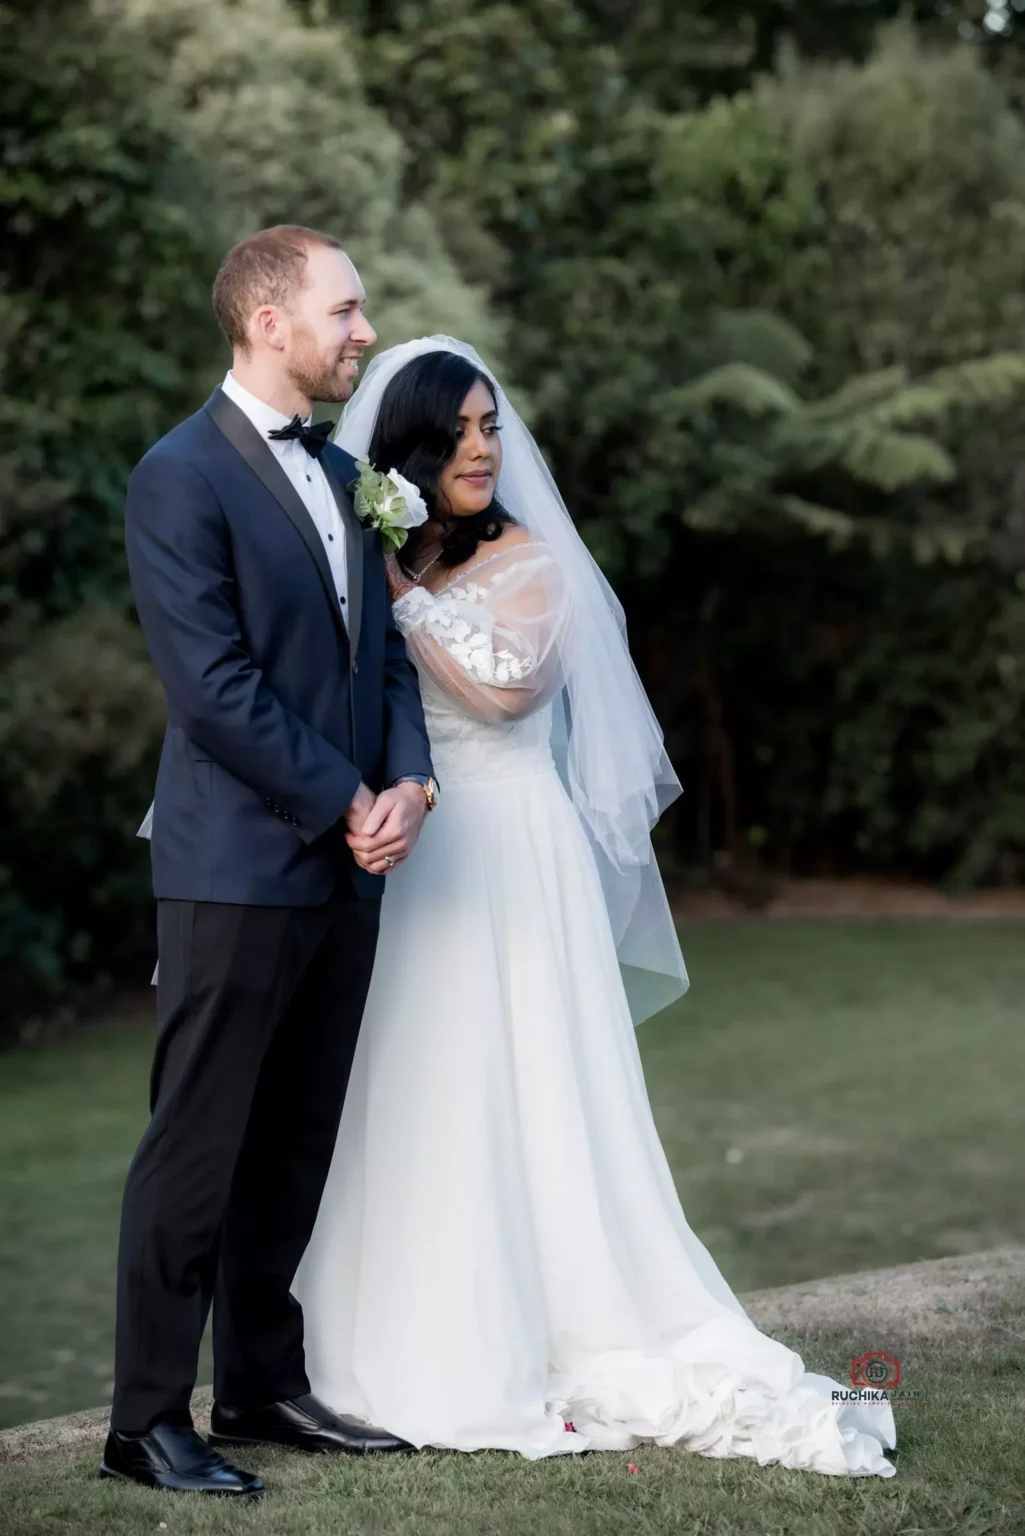 Bride placing her hand on groom's shoulder in outdoor wedding shoot - The Ultimate Wedding Guide